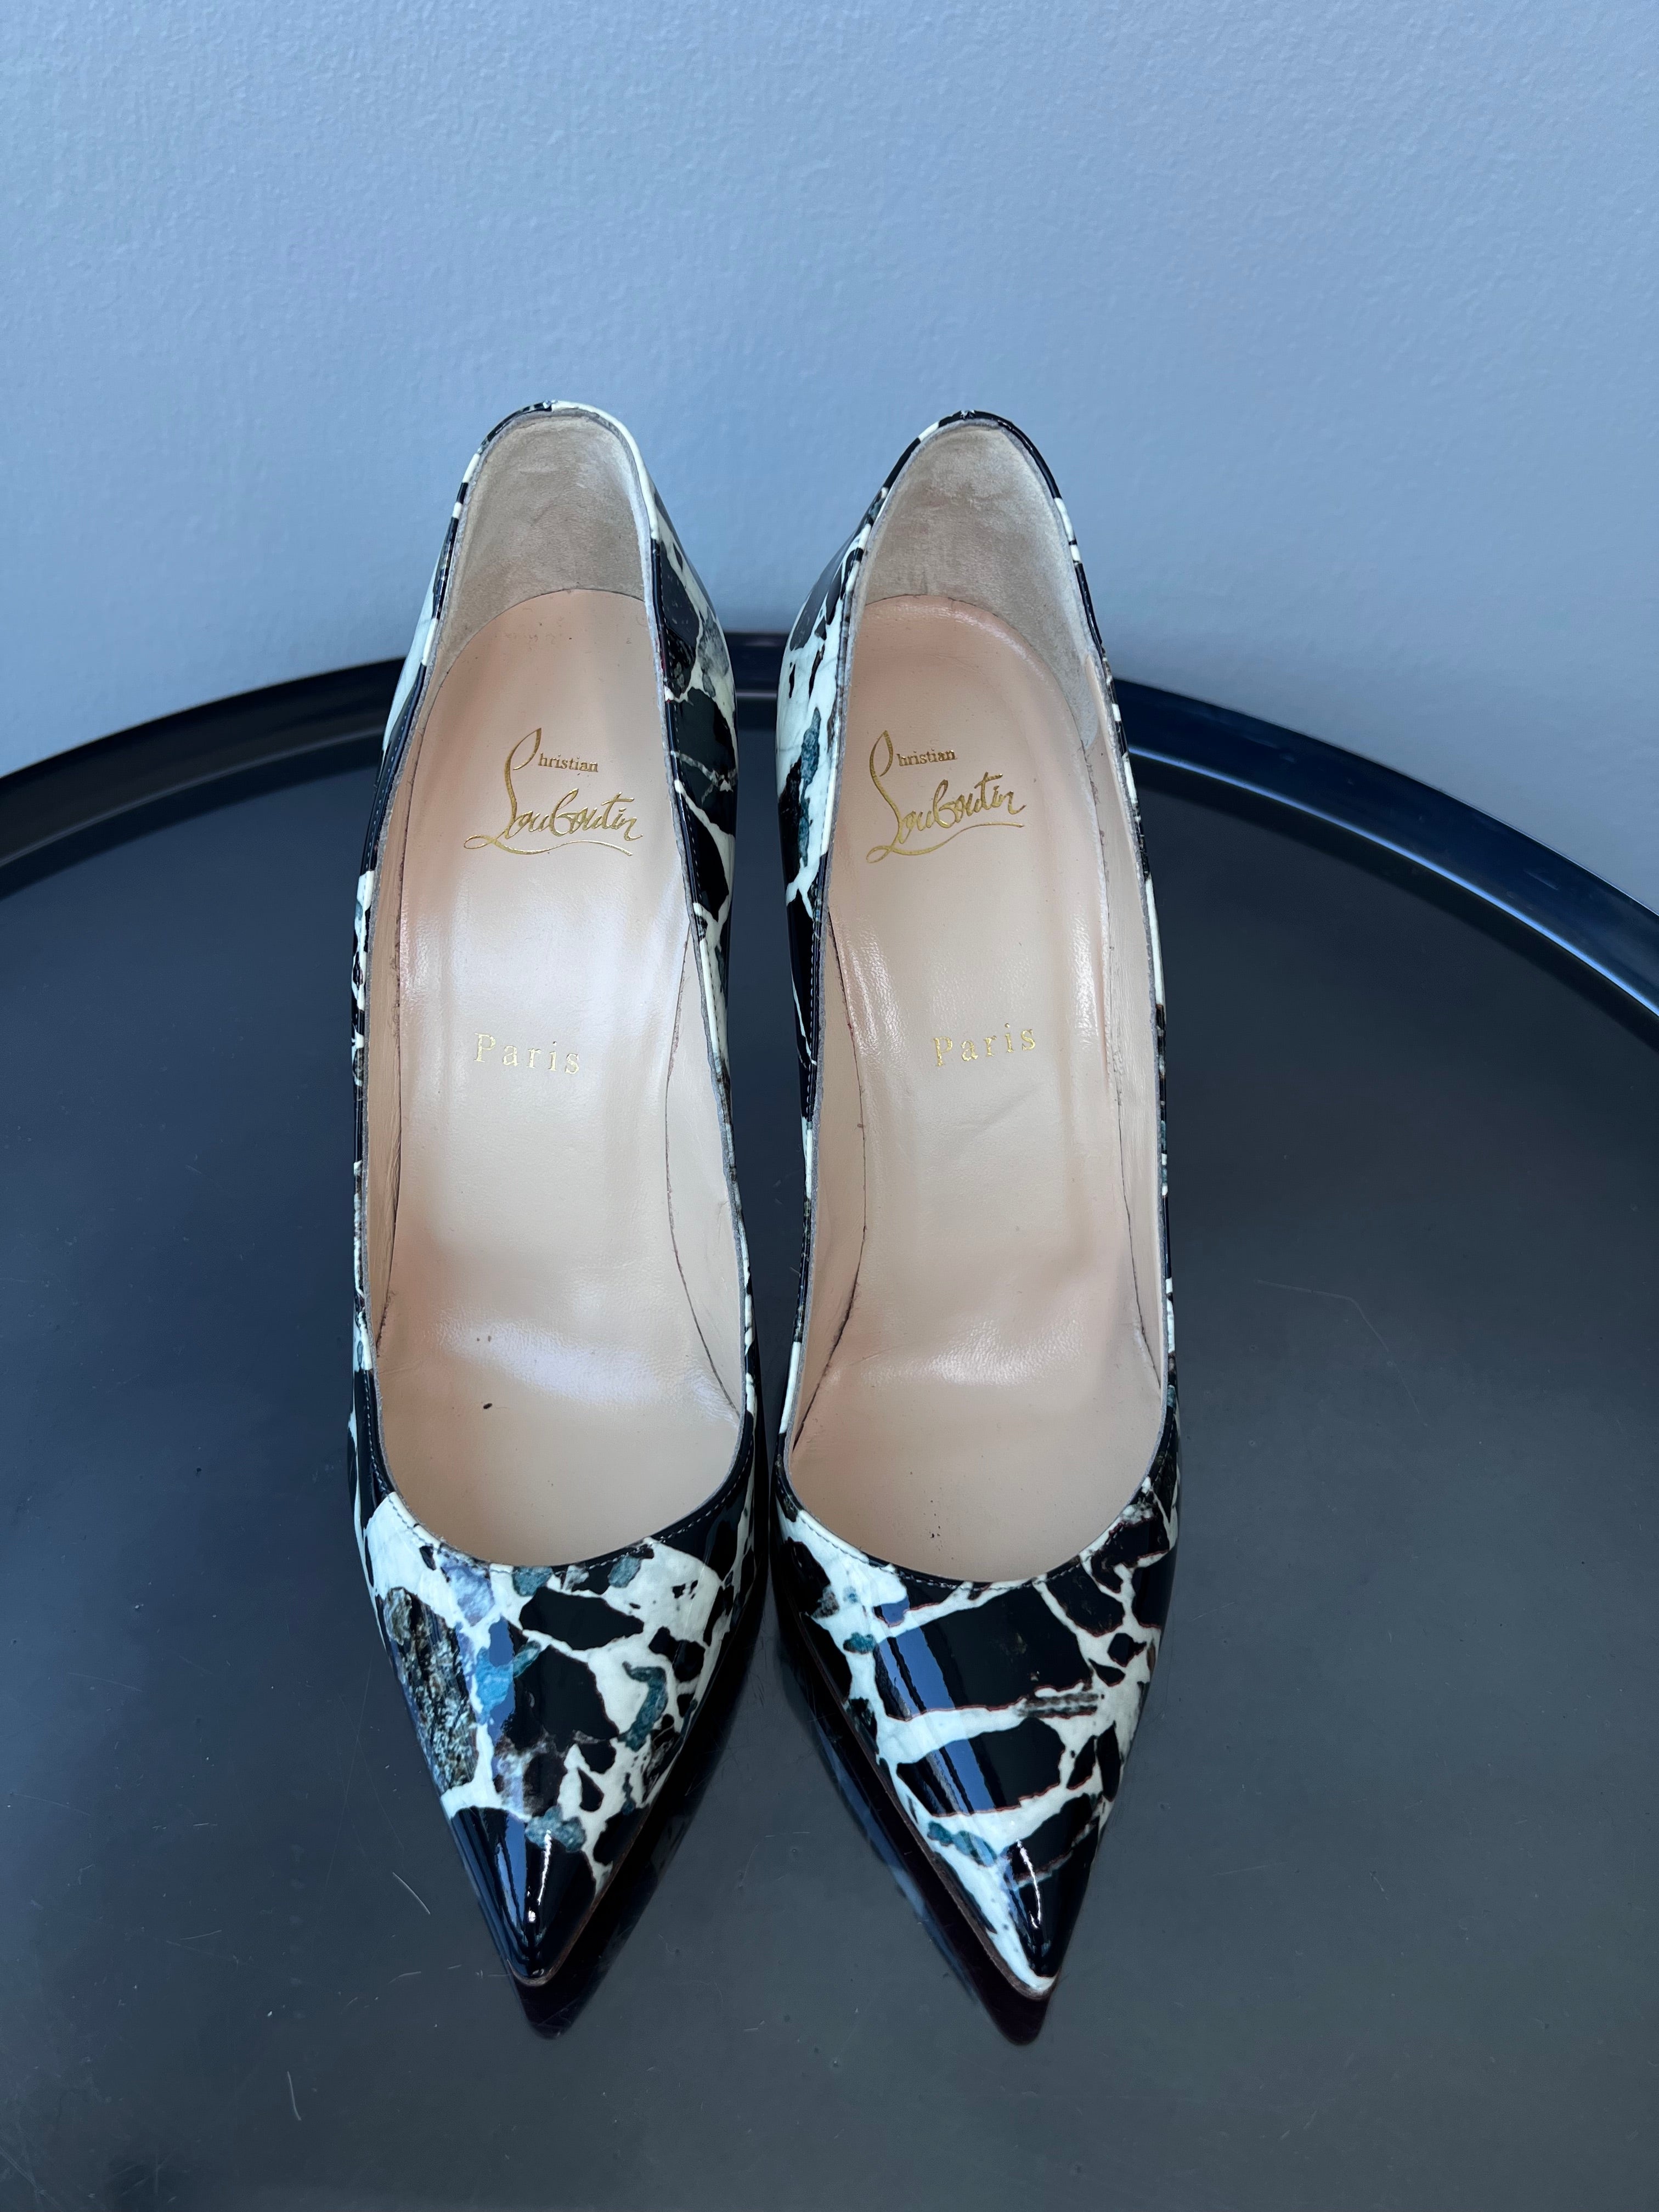 Multicolored stone print pointed toe stiletto heels. - CHRISTIAN LOUBOUTIN